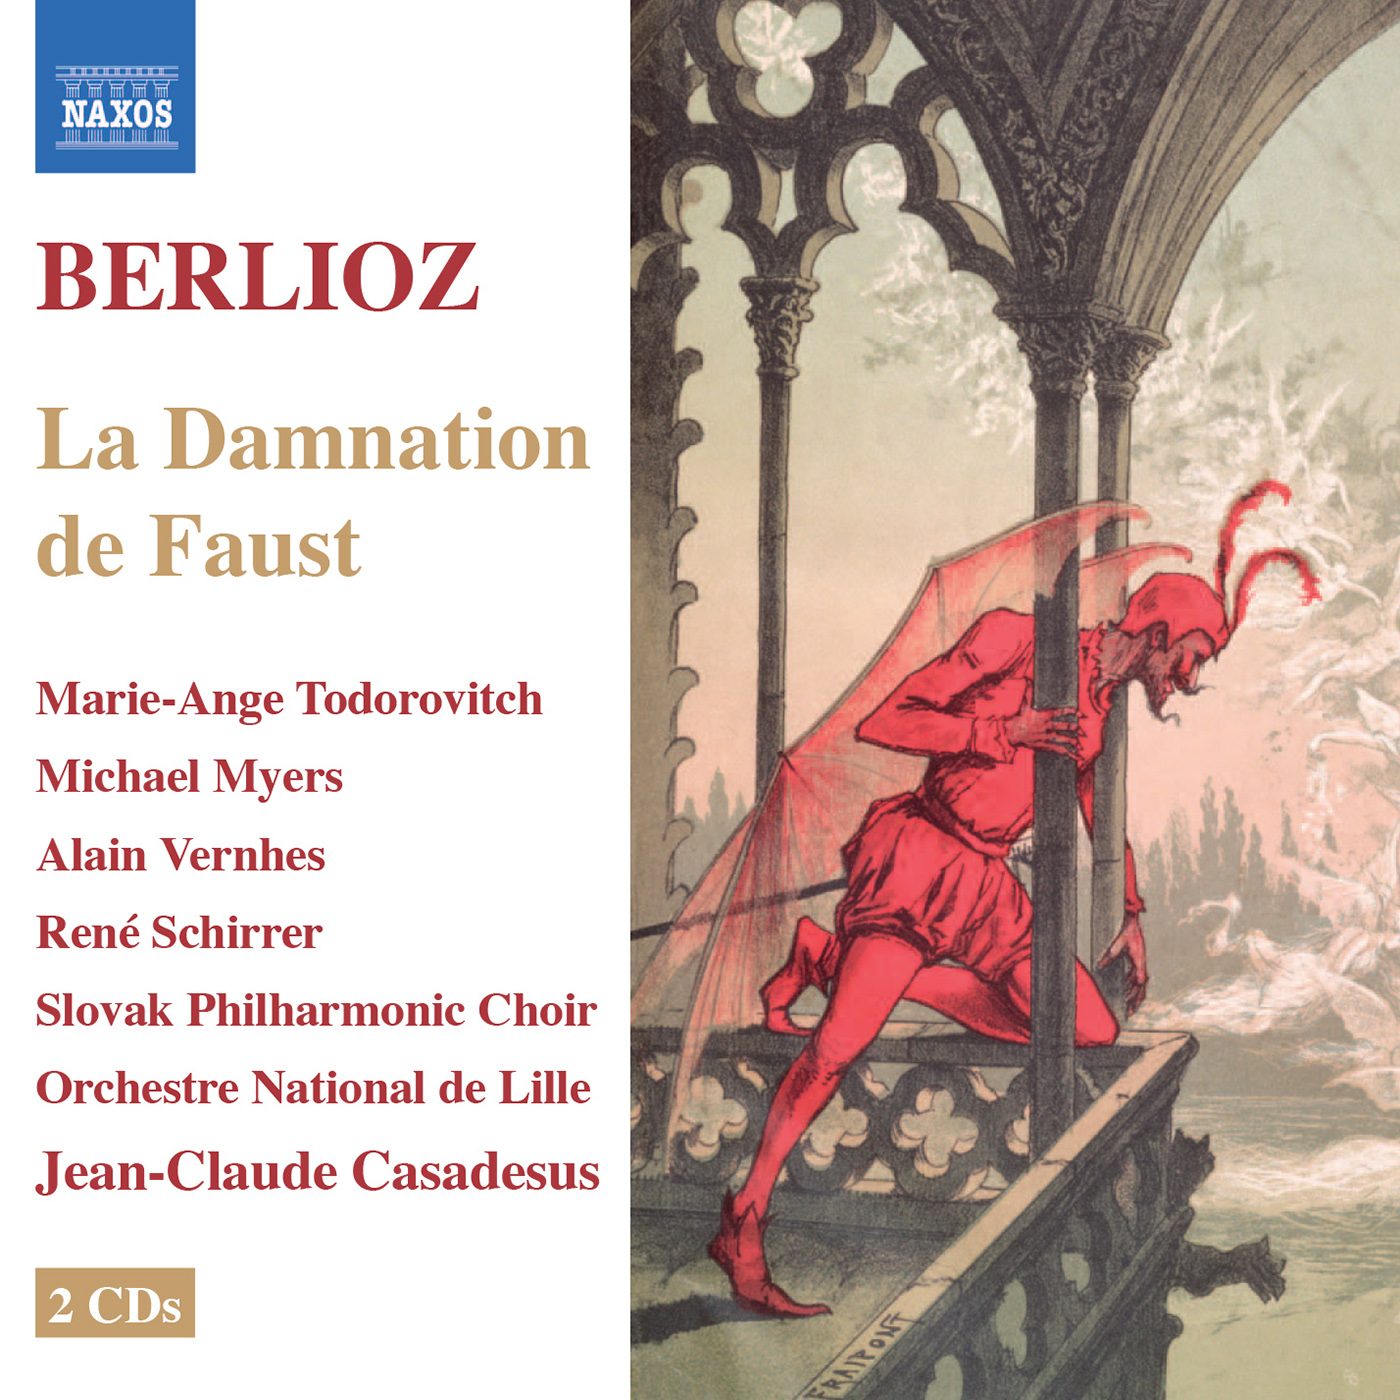 BERLIOZ: Damnation de Faust (La) (The Damnation of Faust)